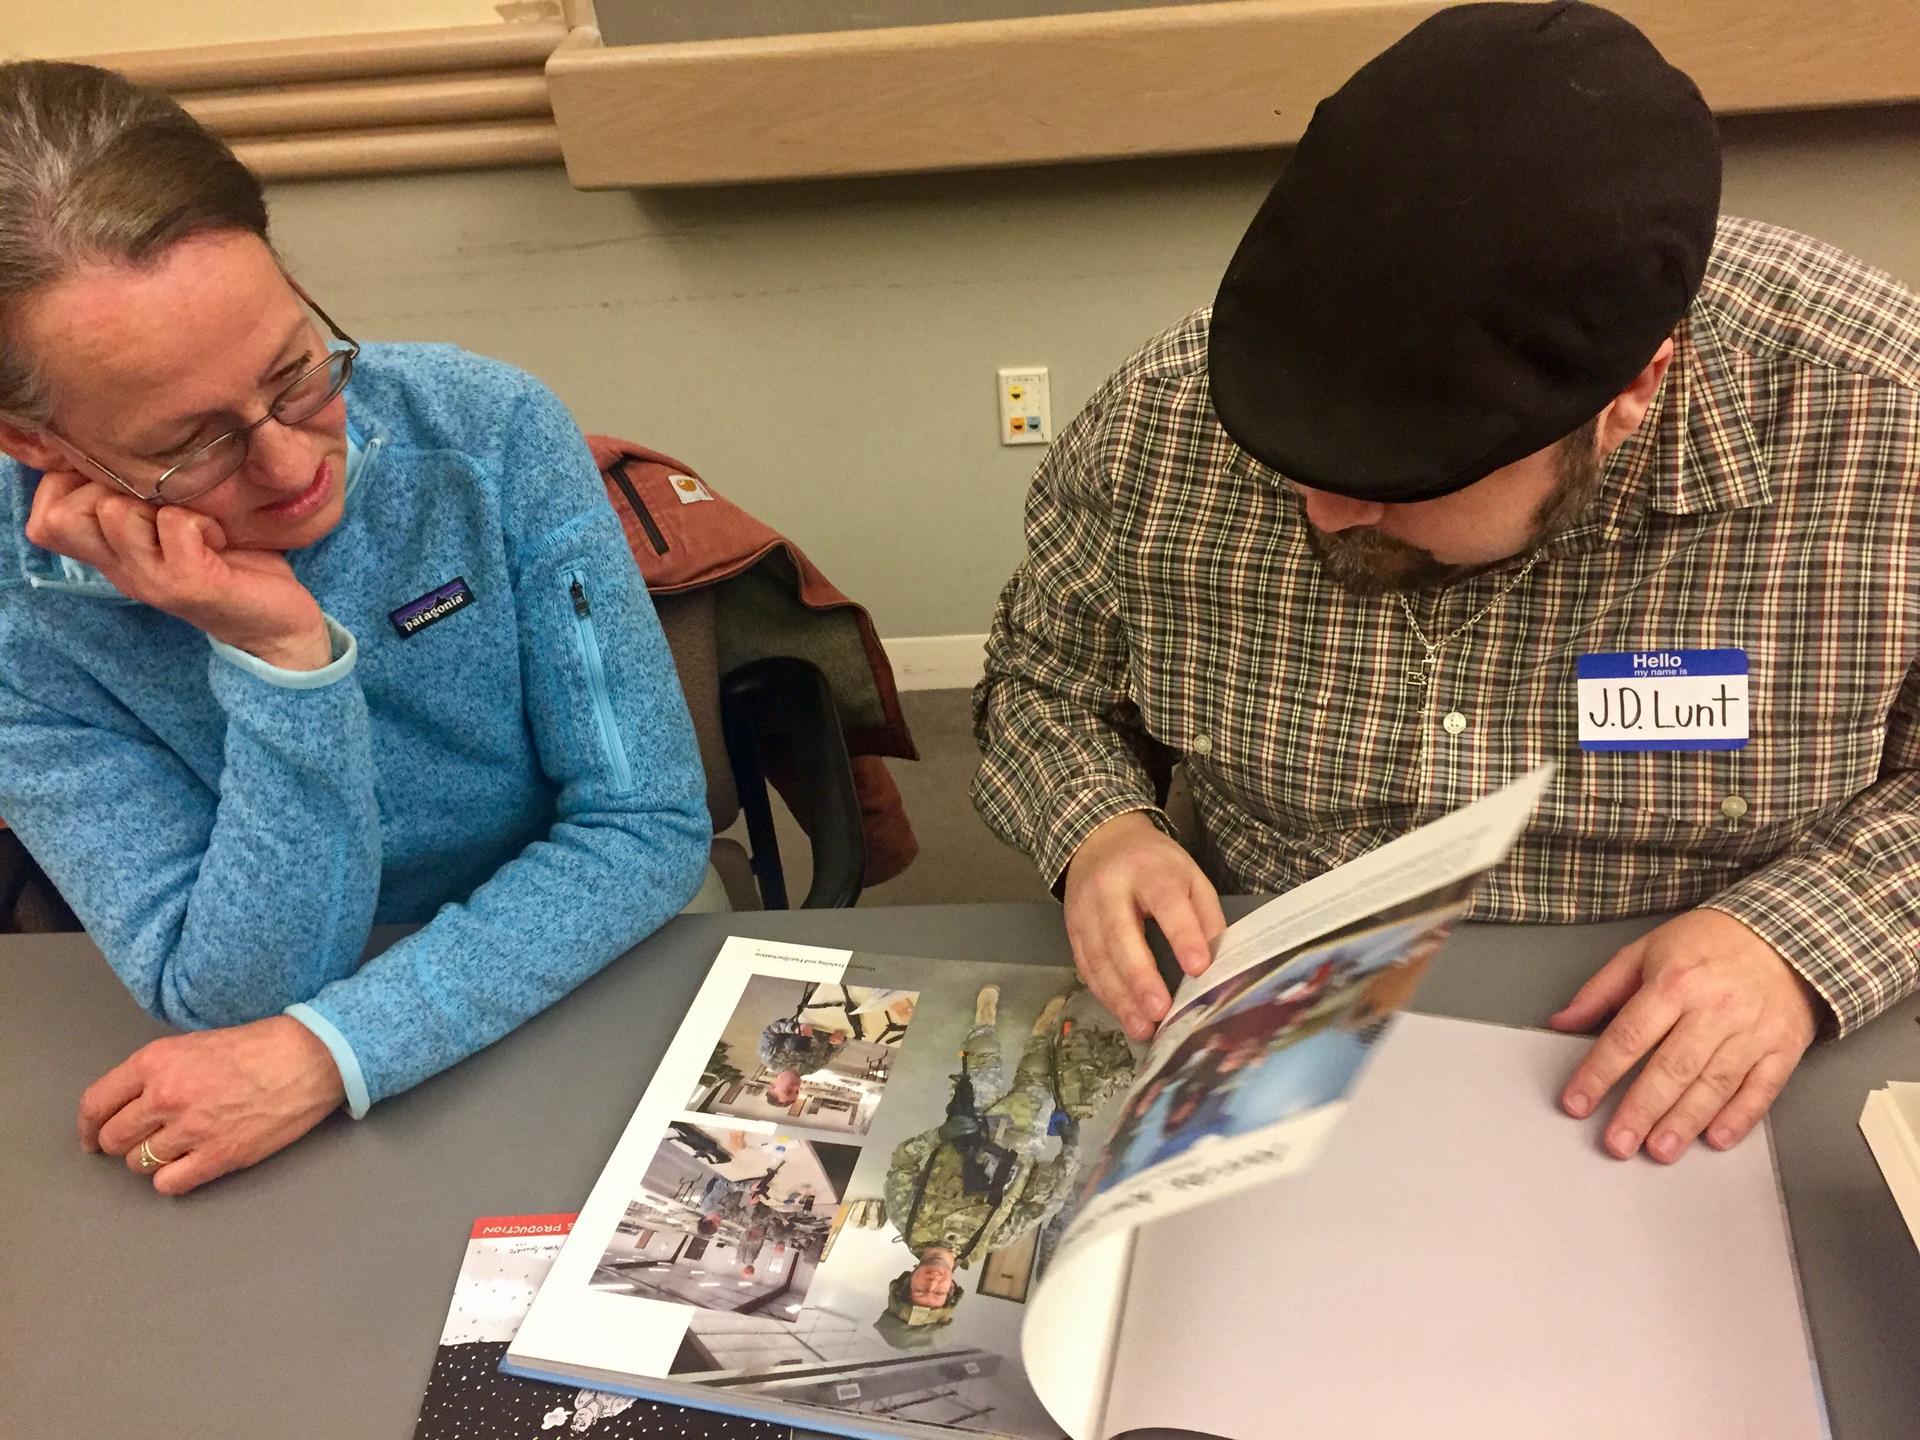 Veteran Sarah Nolin shows cartoonist J.D. Lunt her photo album of her deployment to Afghanistan.